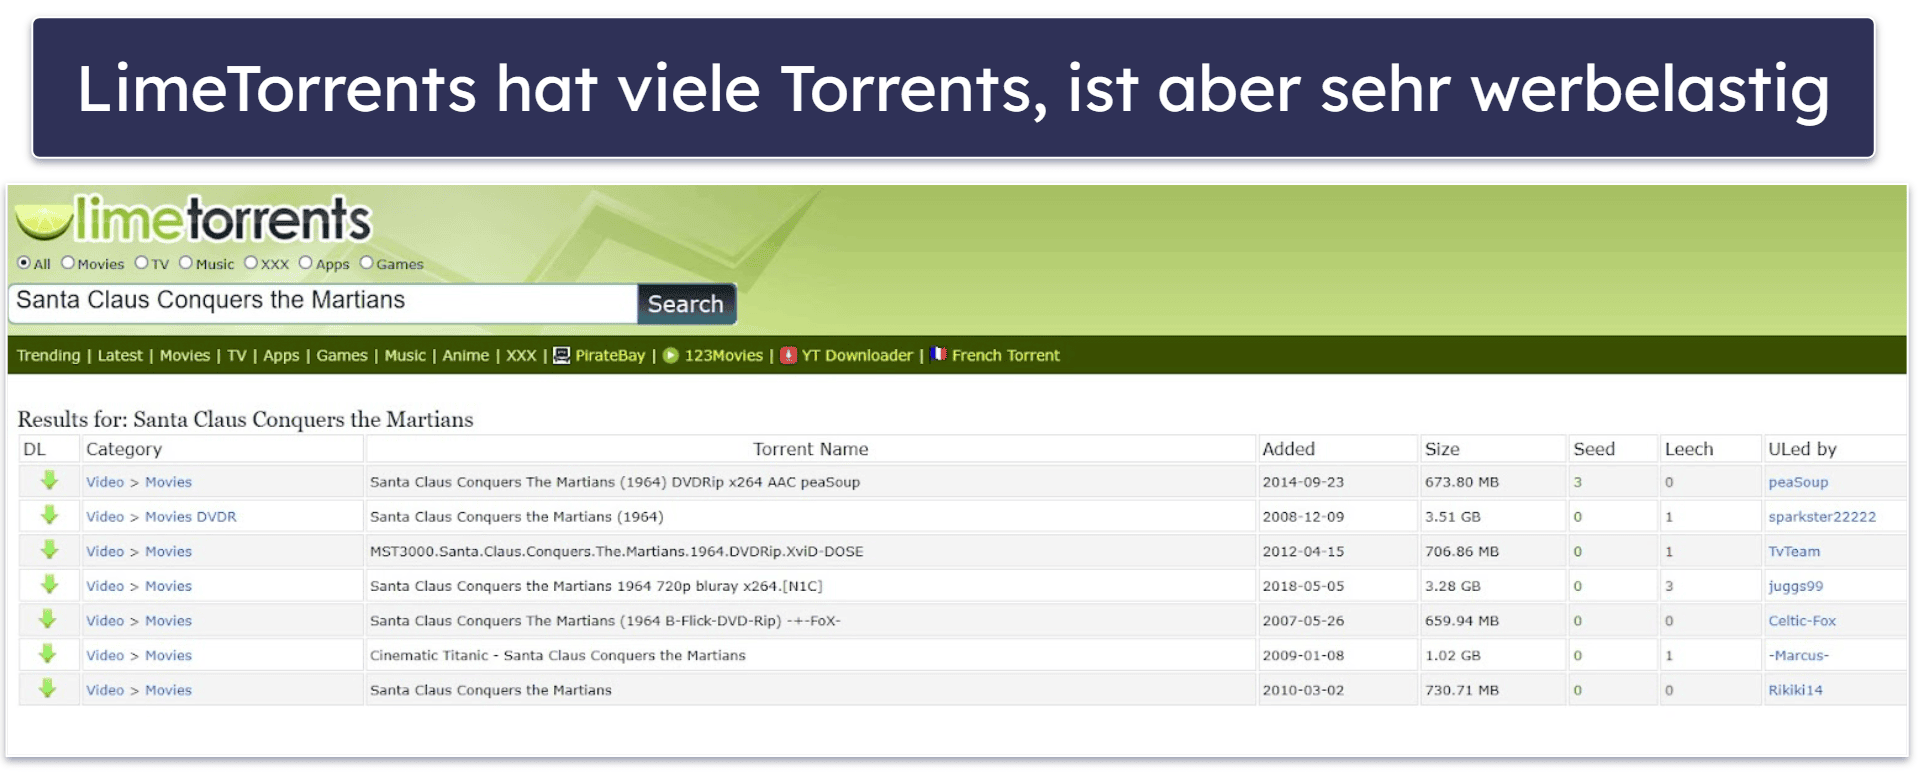 8. LimeTorrents